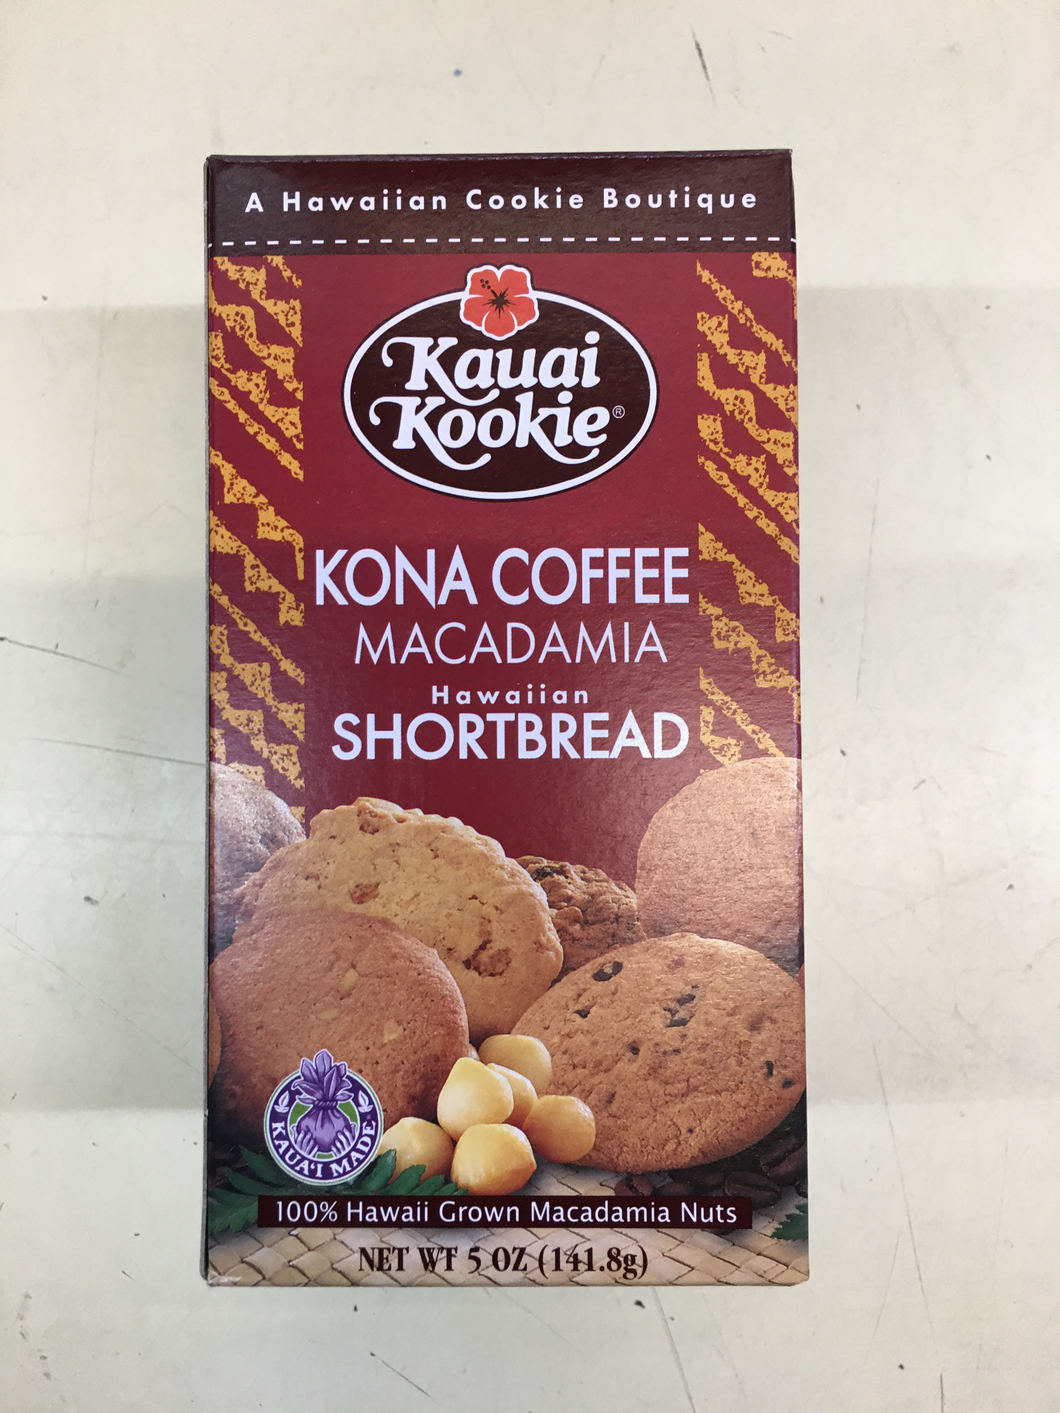 Kauai Kookie Kona Coffee Macadamia